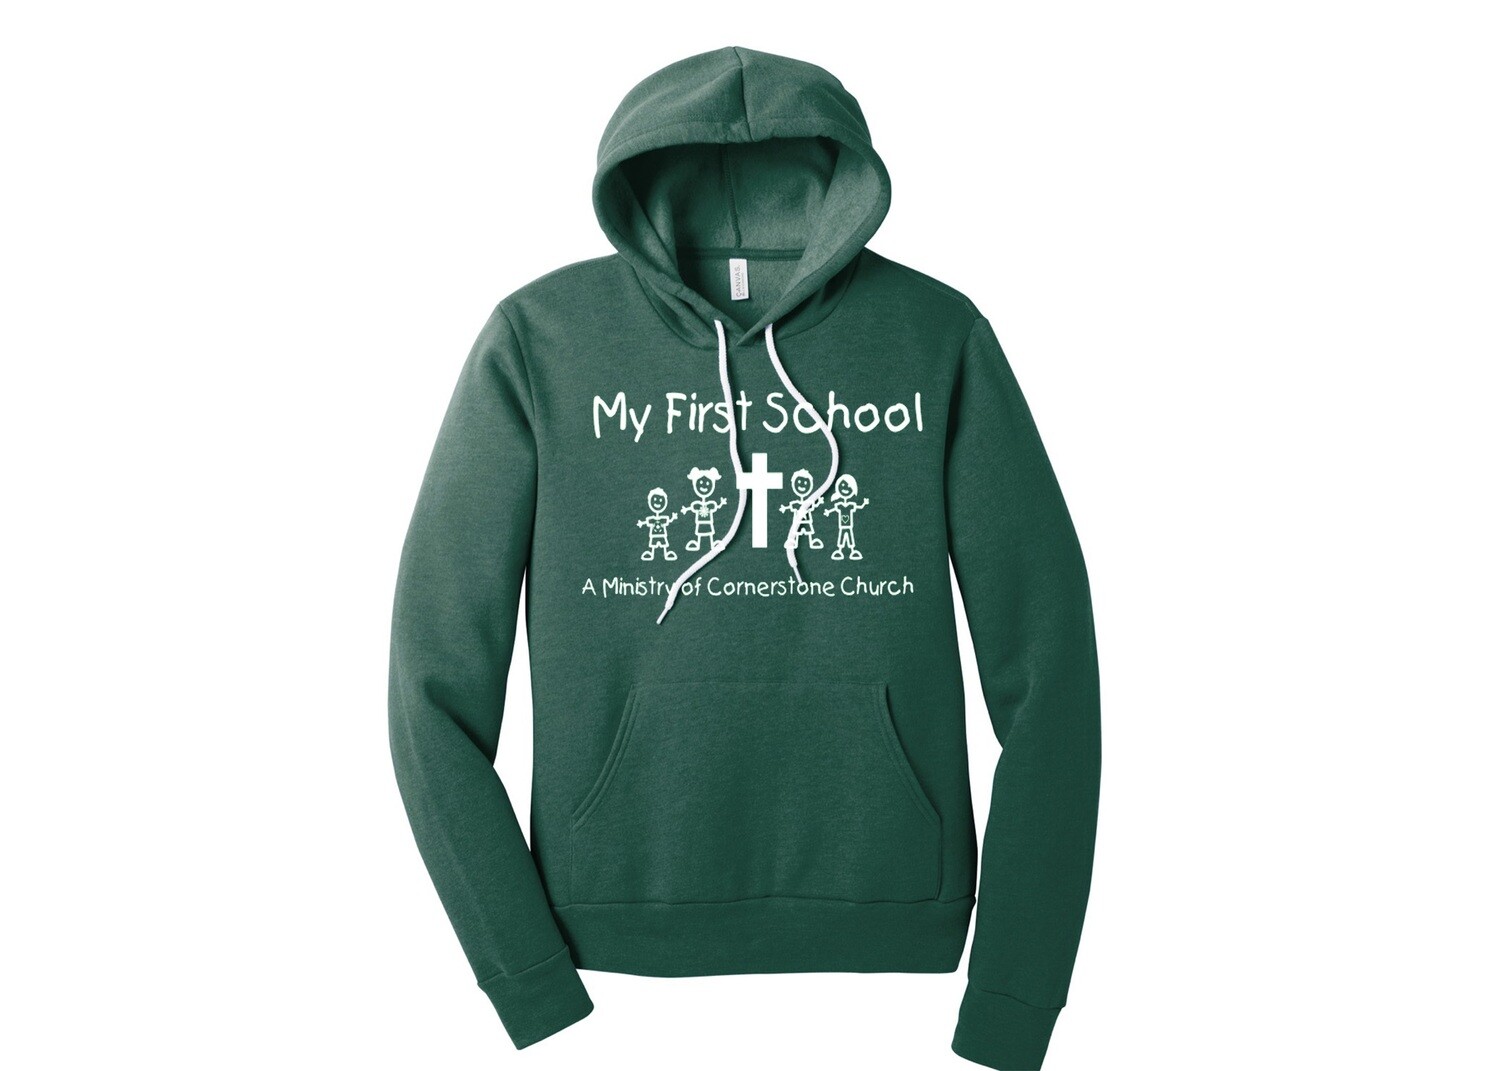 ADULT COMBO DEAL - My First School Heather Forest Green Fleece Pullover Hooded Sweatshirt/Cotton Tee Shirt